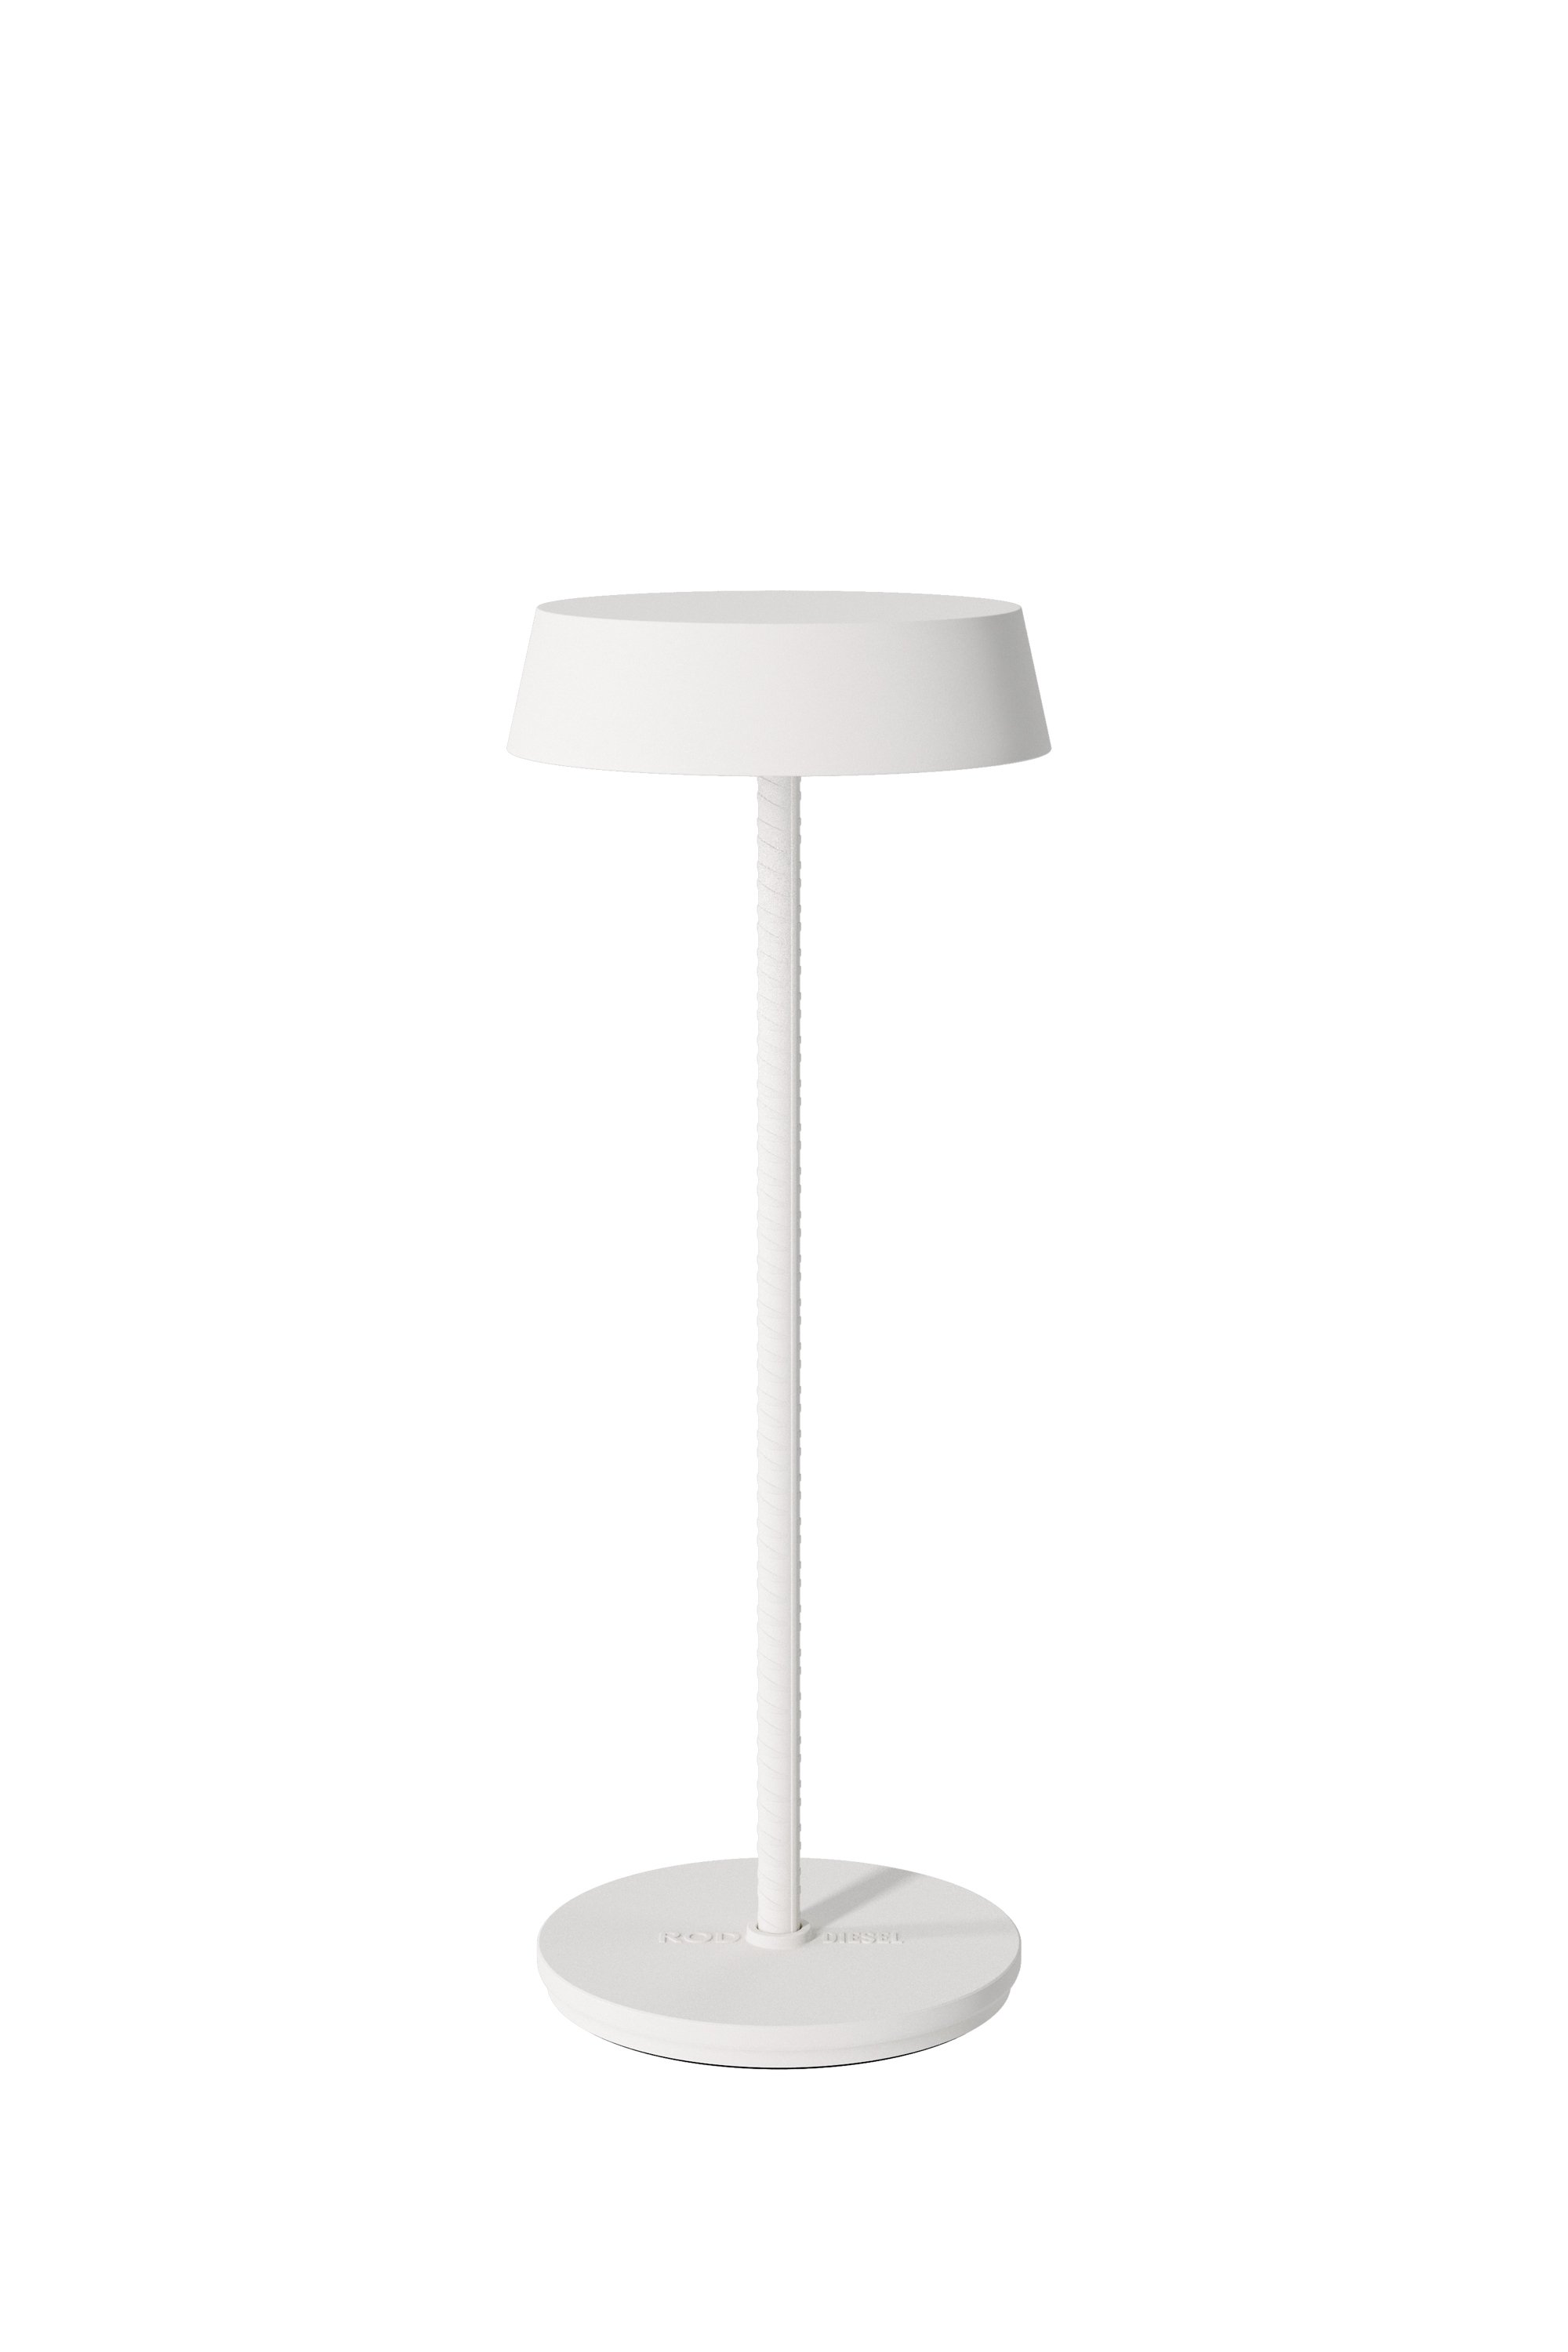 51181 5630 ROD CORDLESS TABLE LAMP IVORY, White - Lighting